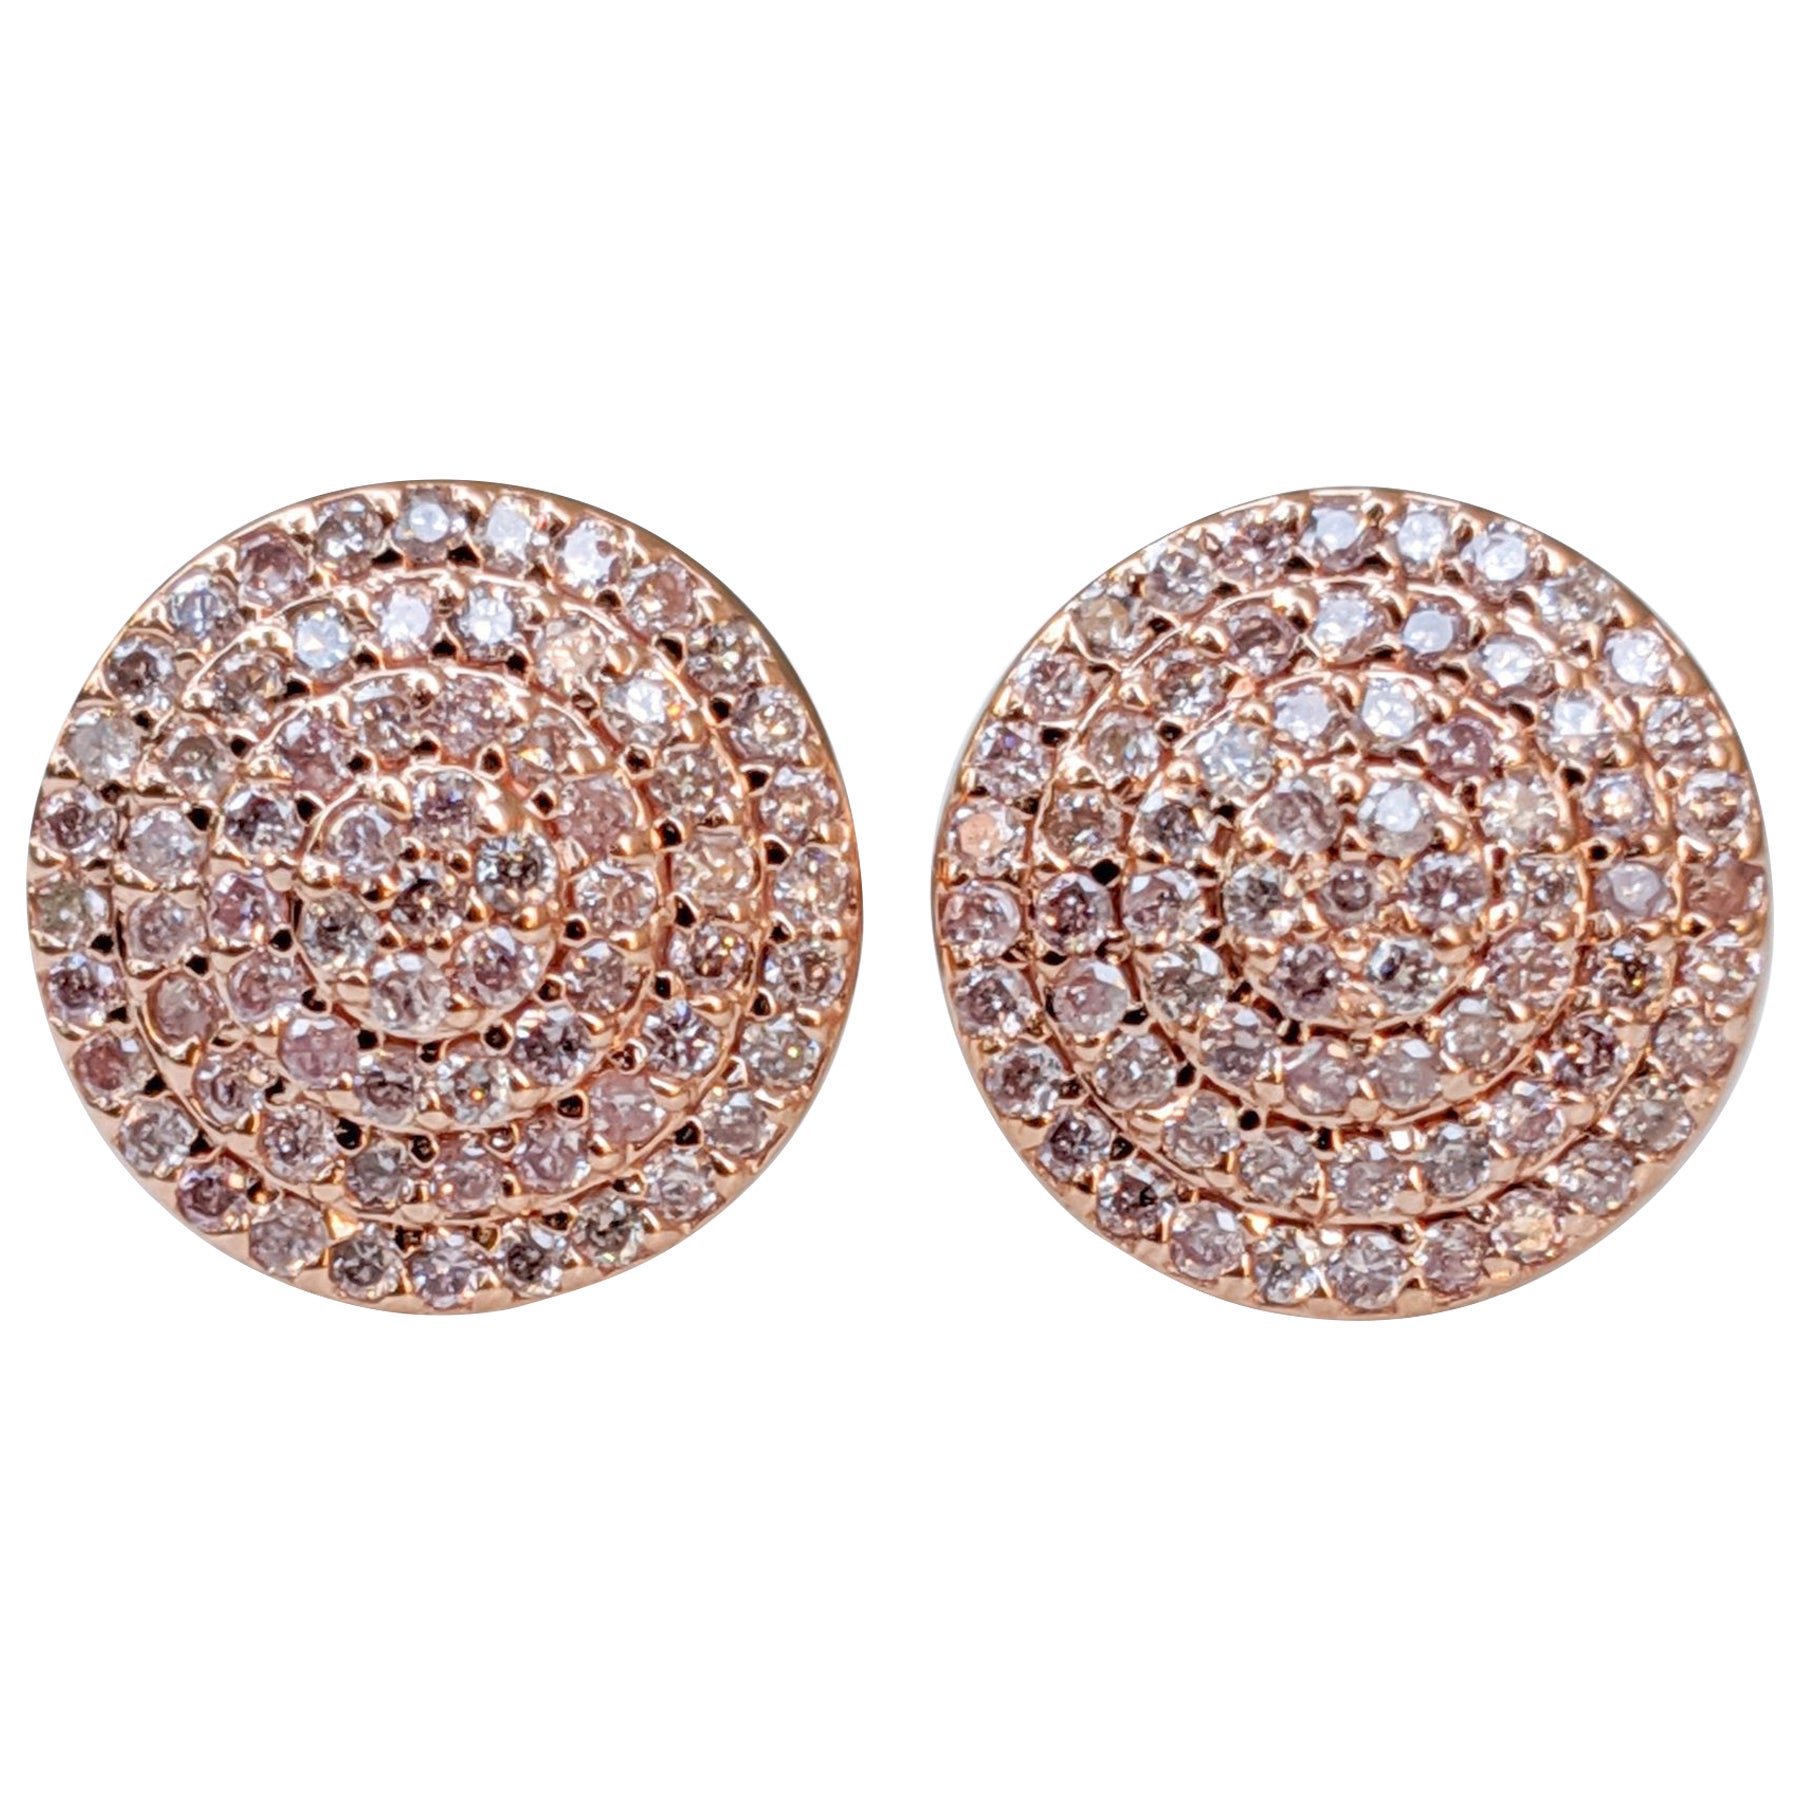 NO RESERVE! 0.30 Carat Fancy Pink Diamond - 14 kt. Pink gold - Earrings